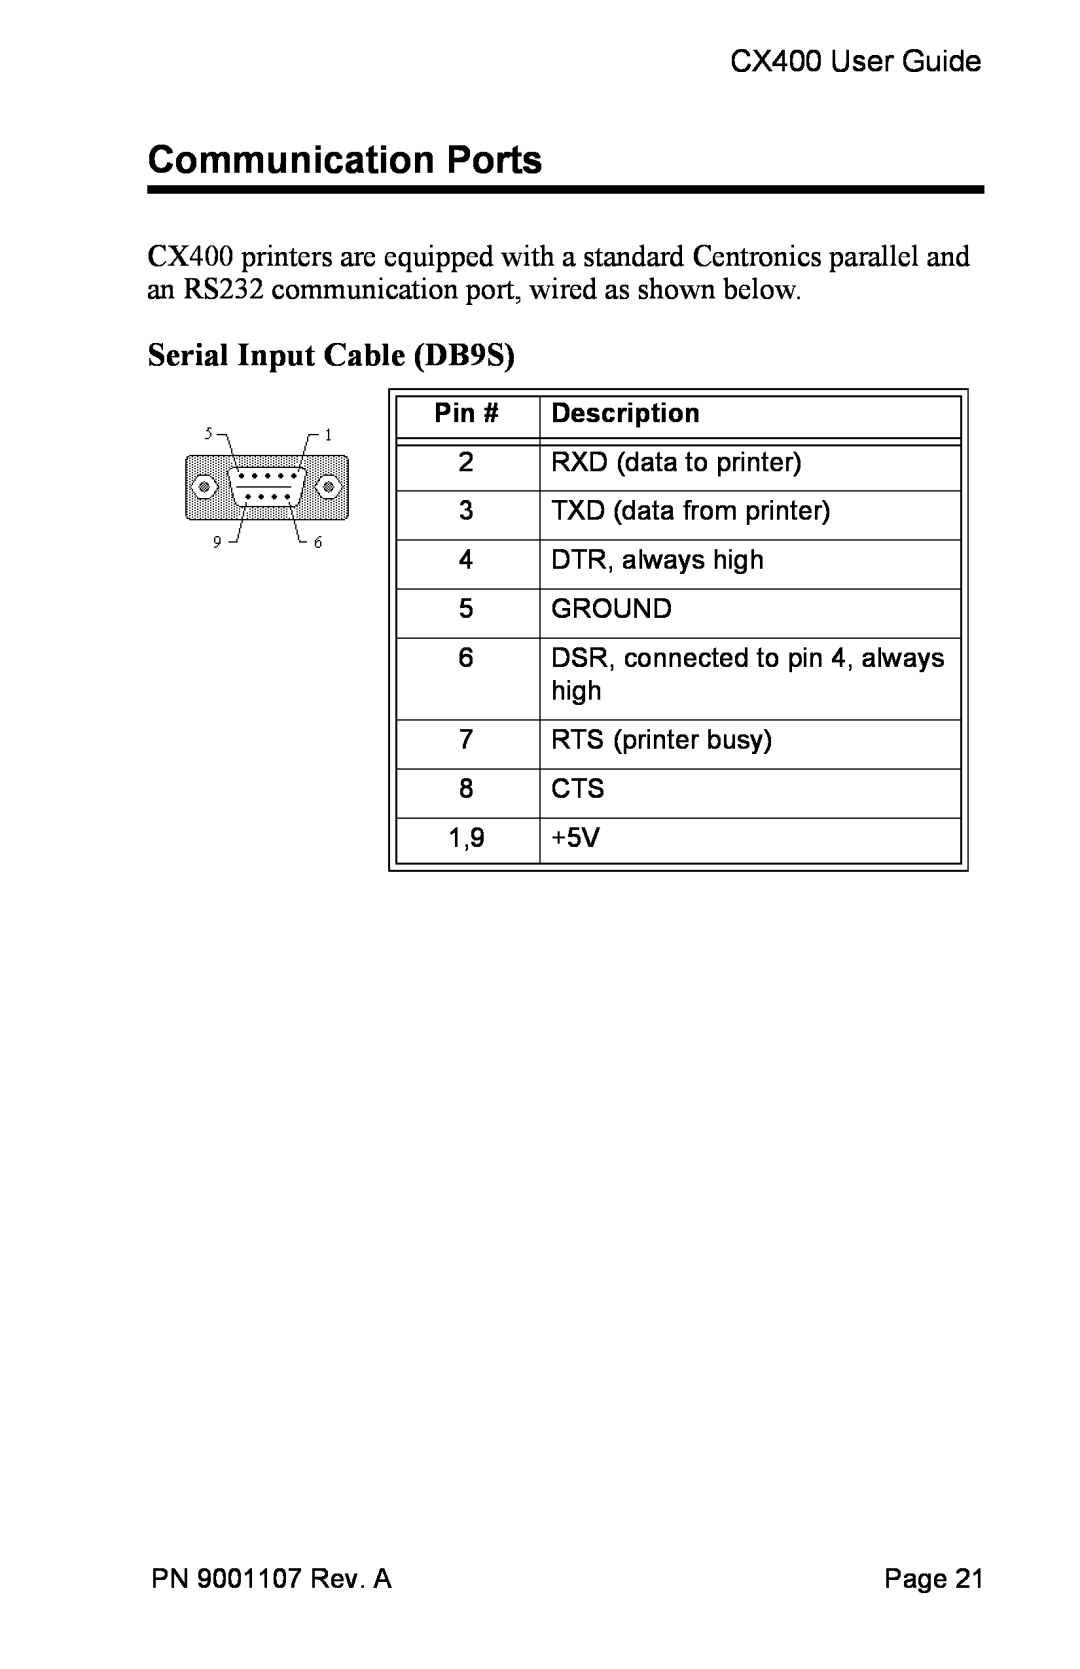 SATO manual Communication Ports, Serial Input Cable DB9S, CX400 User Guide, Pin #, Description 